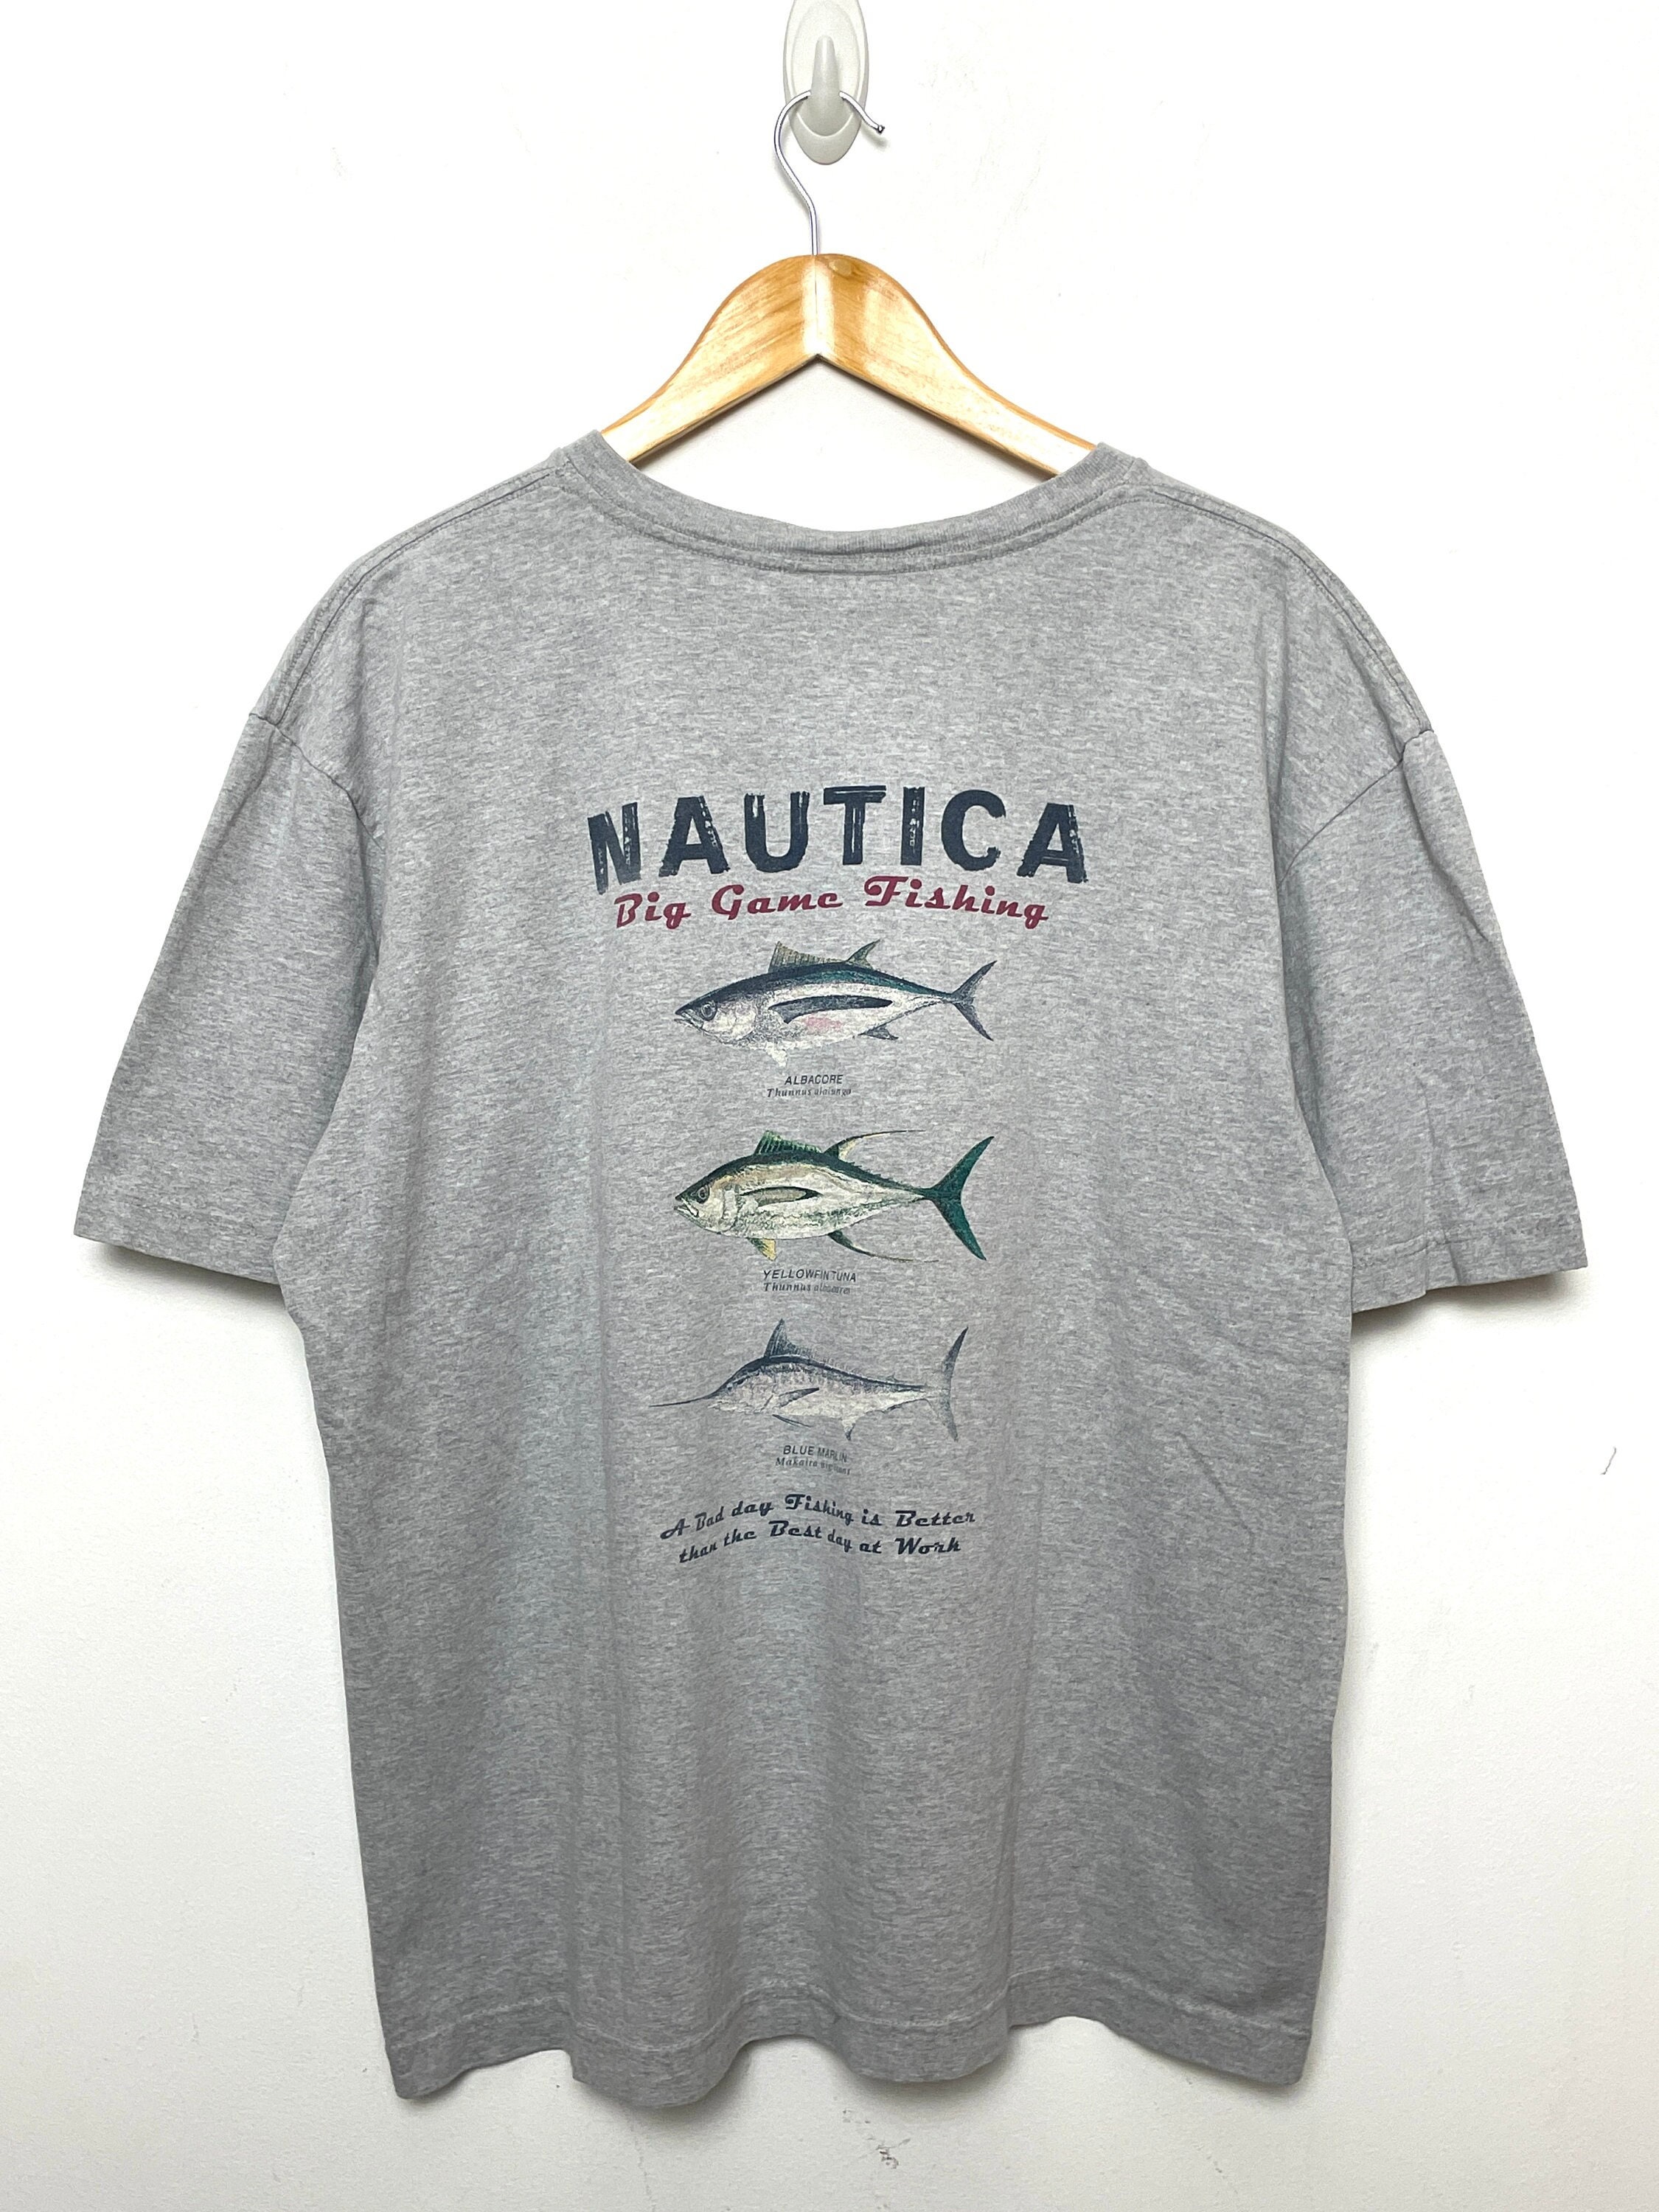 Vintage 1990s Nautica Deep Sea Big Game Fishing Albacore Yellowfin Tuna Blue Marlin Graphic Made in USA Sailing Pocket Tee Shirt (Size L)